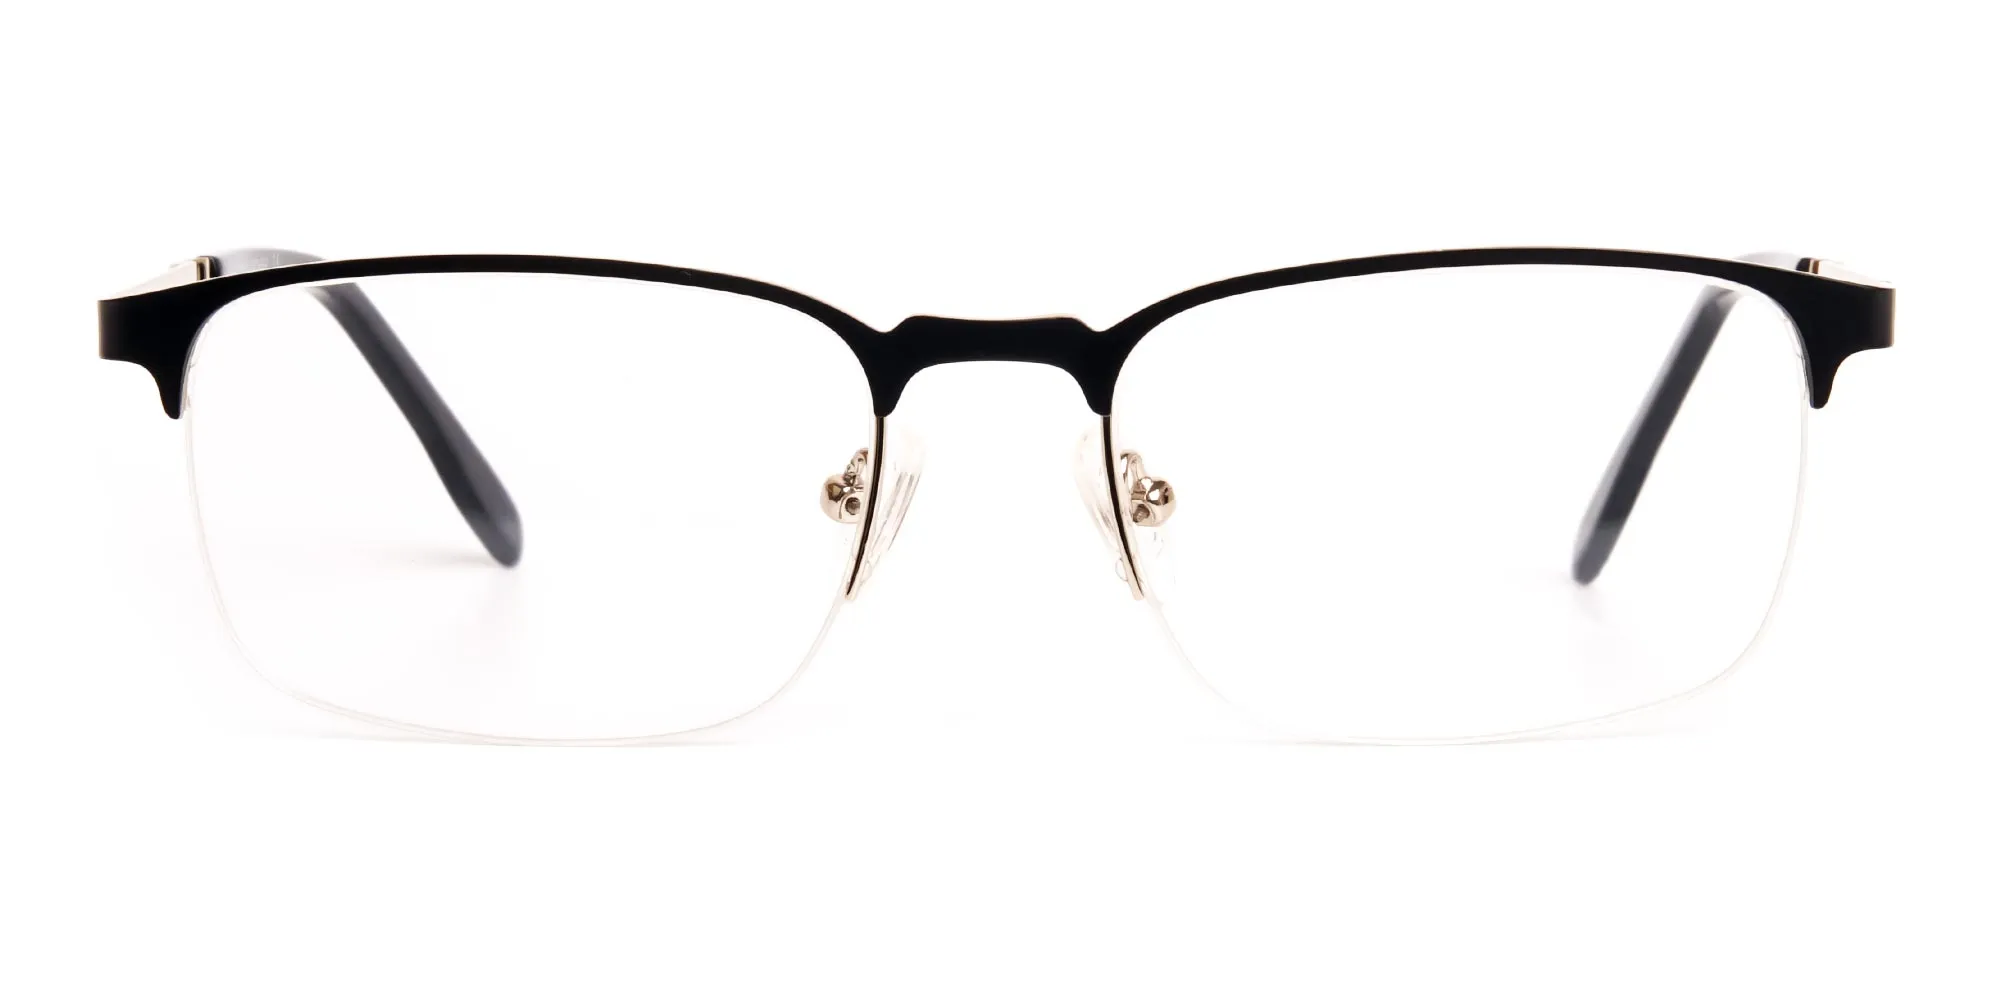 black and silver rectangular half rim glasses frames-2